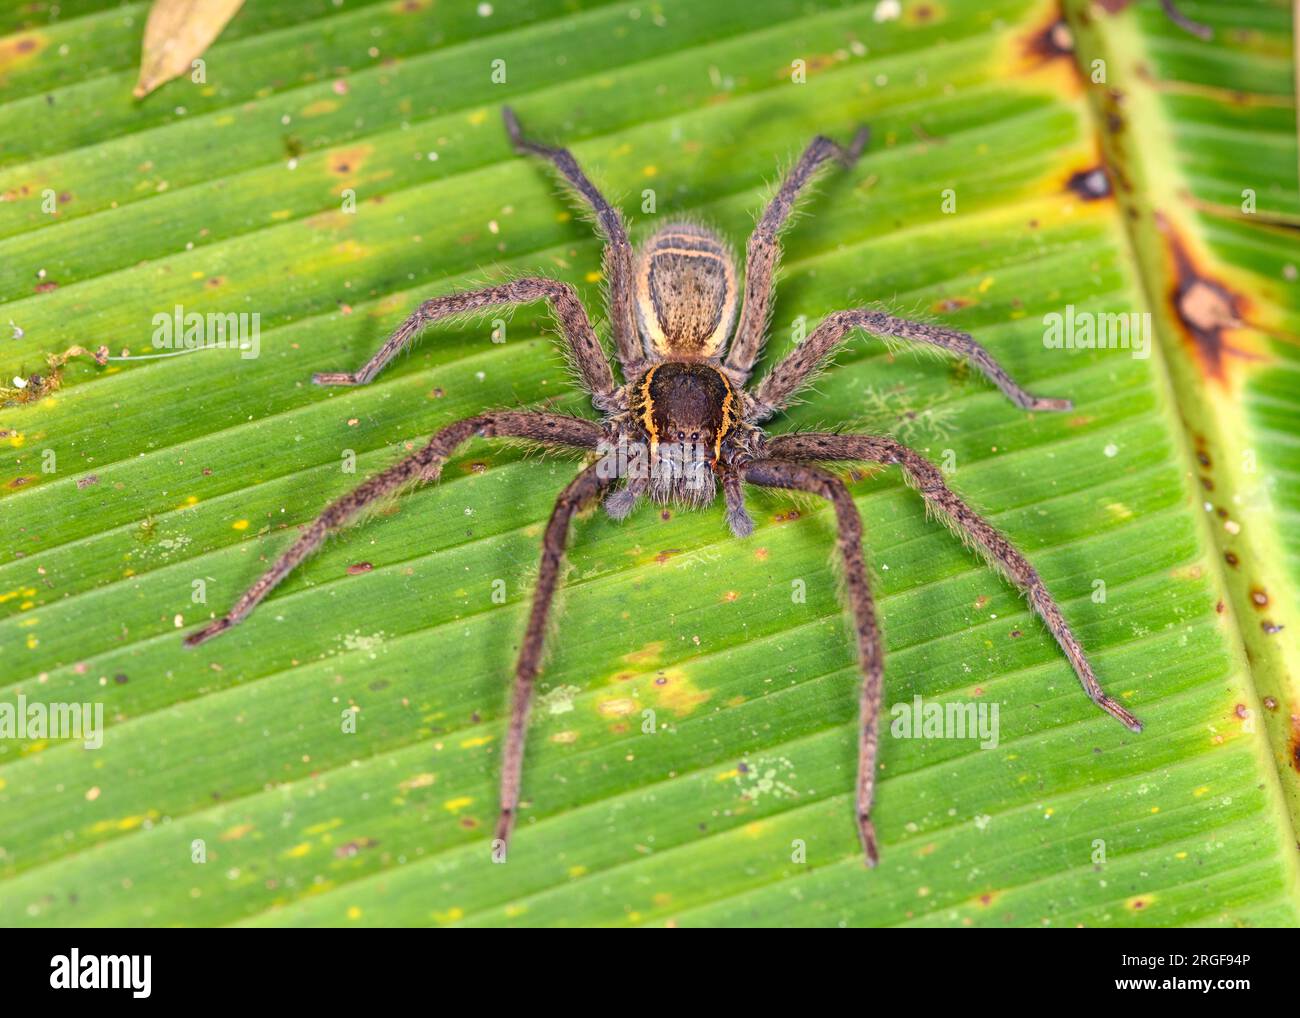 Bromeliad spider (Cupiennius sp.?) from Bosque de Paz, Costa Rica. Stock Photo